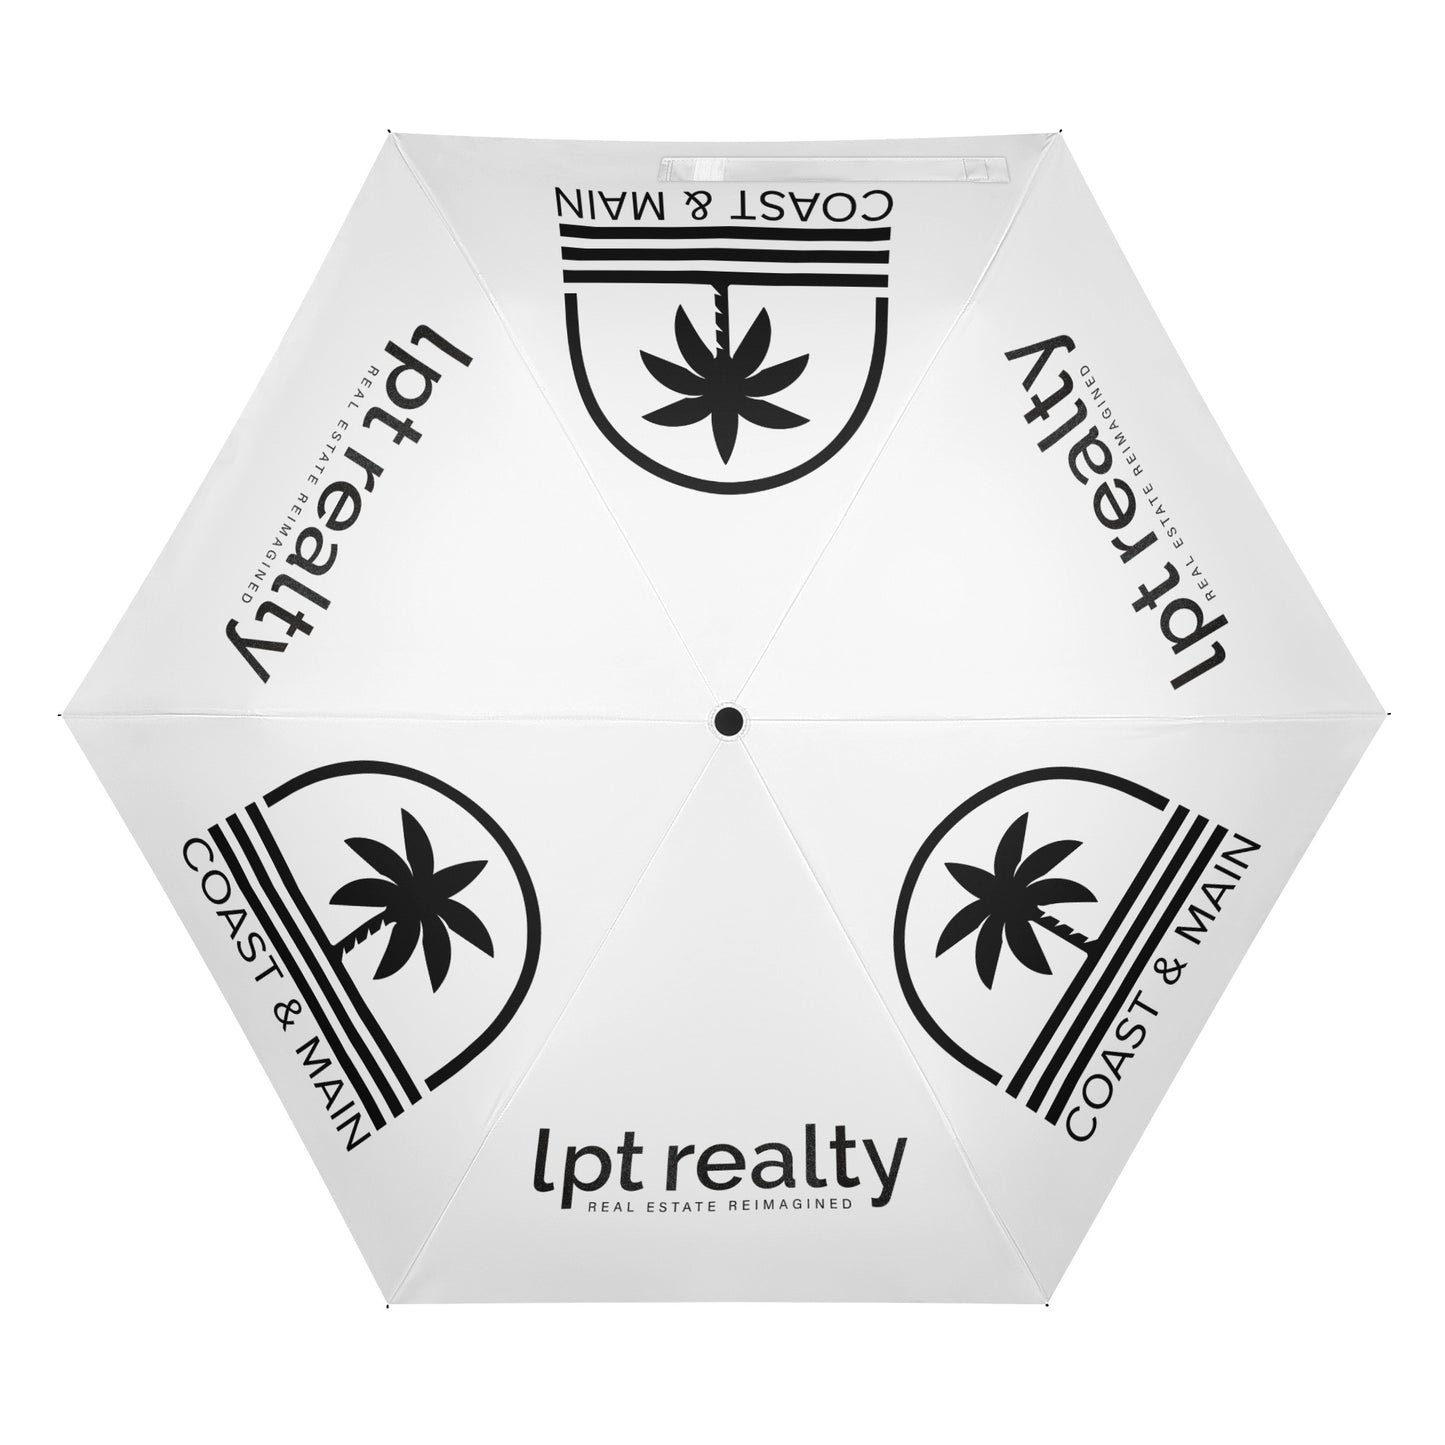 Umbrella Lightweight Auto Open & Close  - Coast & Main Logo with LPT Logo on  White